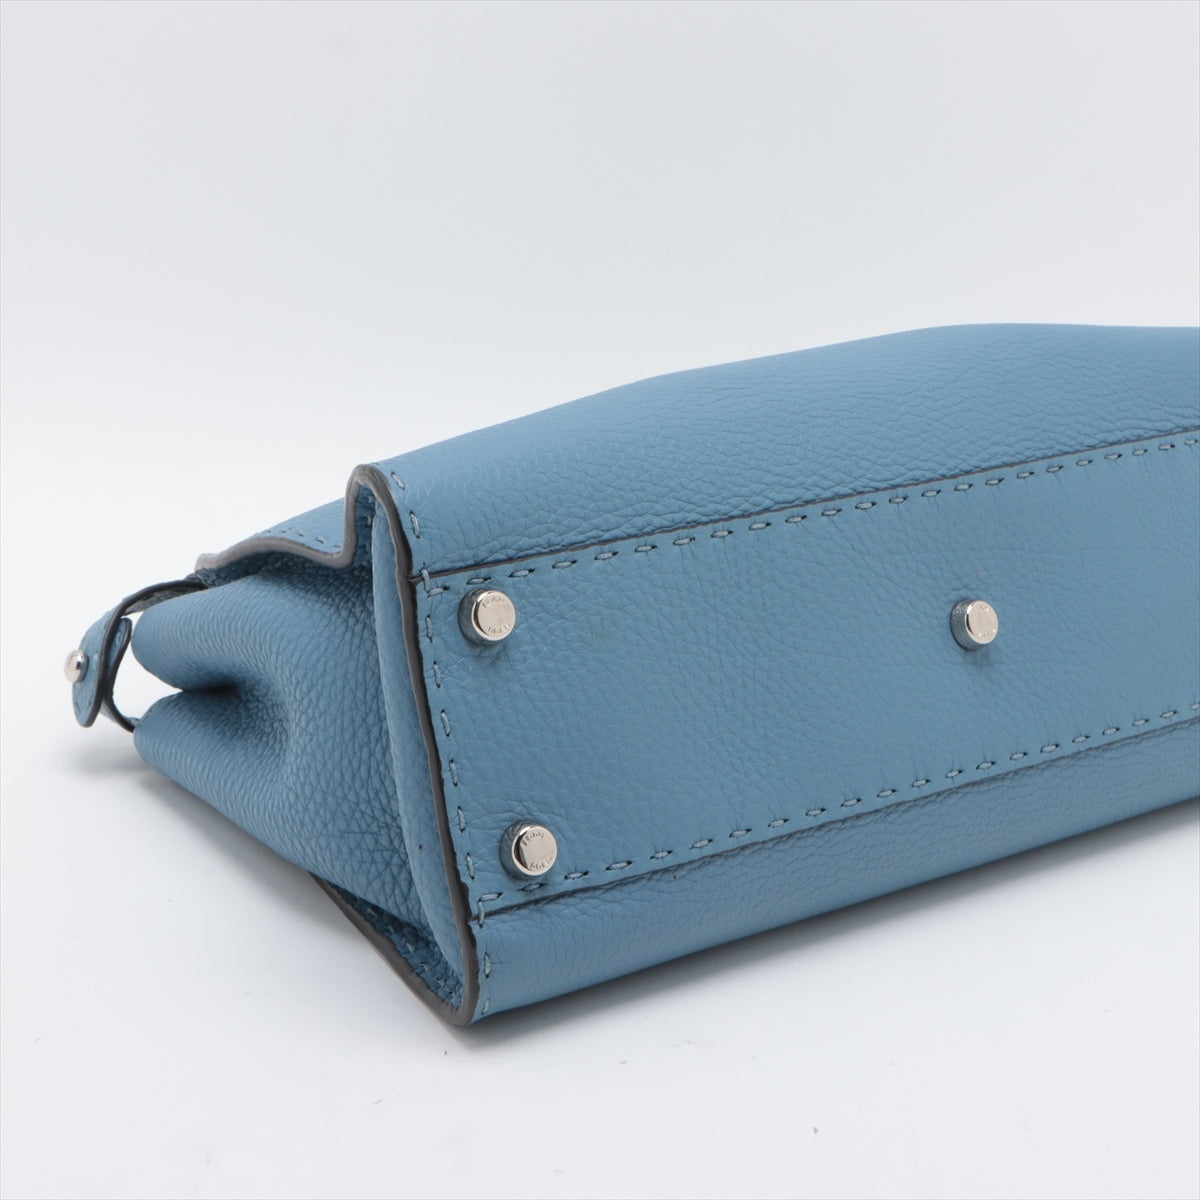 Fendi PEEKABOO REGULAR Selleria Leather Hand bag Blue 8BN290